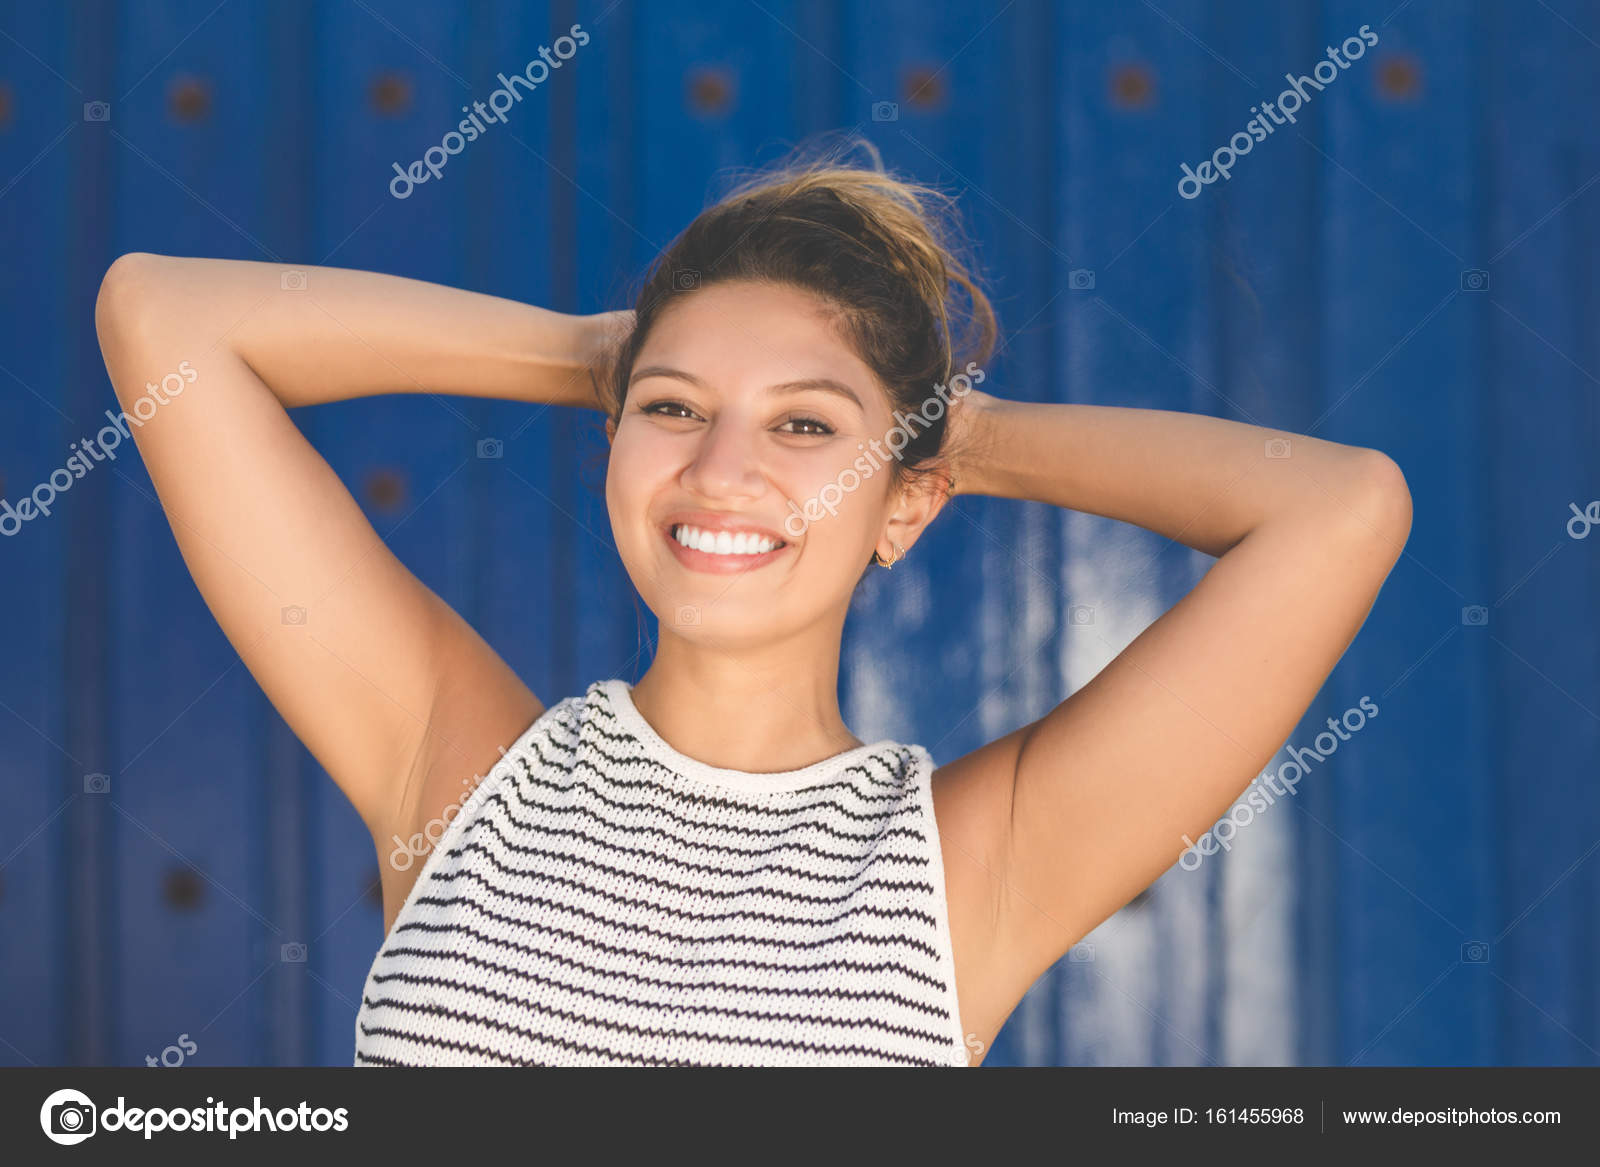 https://st3.depositphotos.com/3282321/16145/i/1600/depositphotos_161455968-stock-photo-young-happy-woman-on-blue.jpg